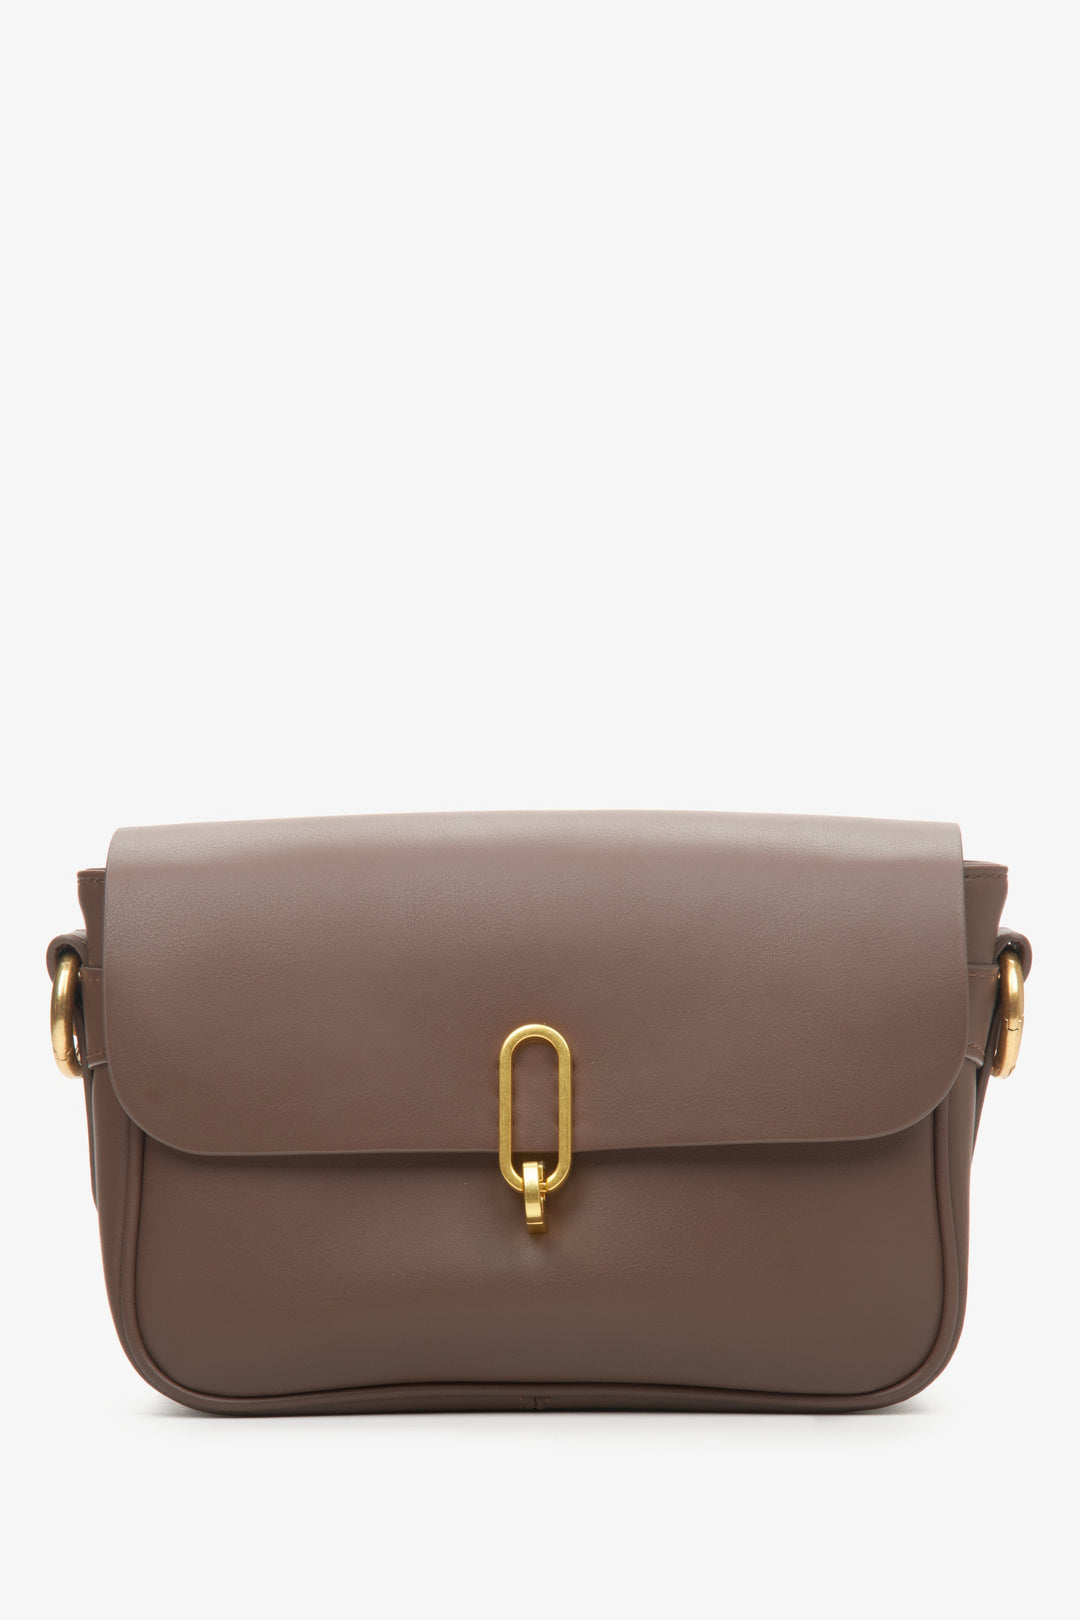 Women's dark brown shoulder bag made of genuine leather by Estro.